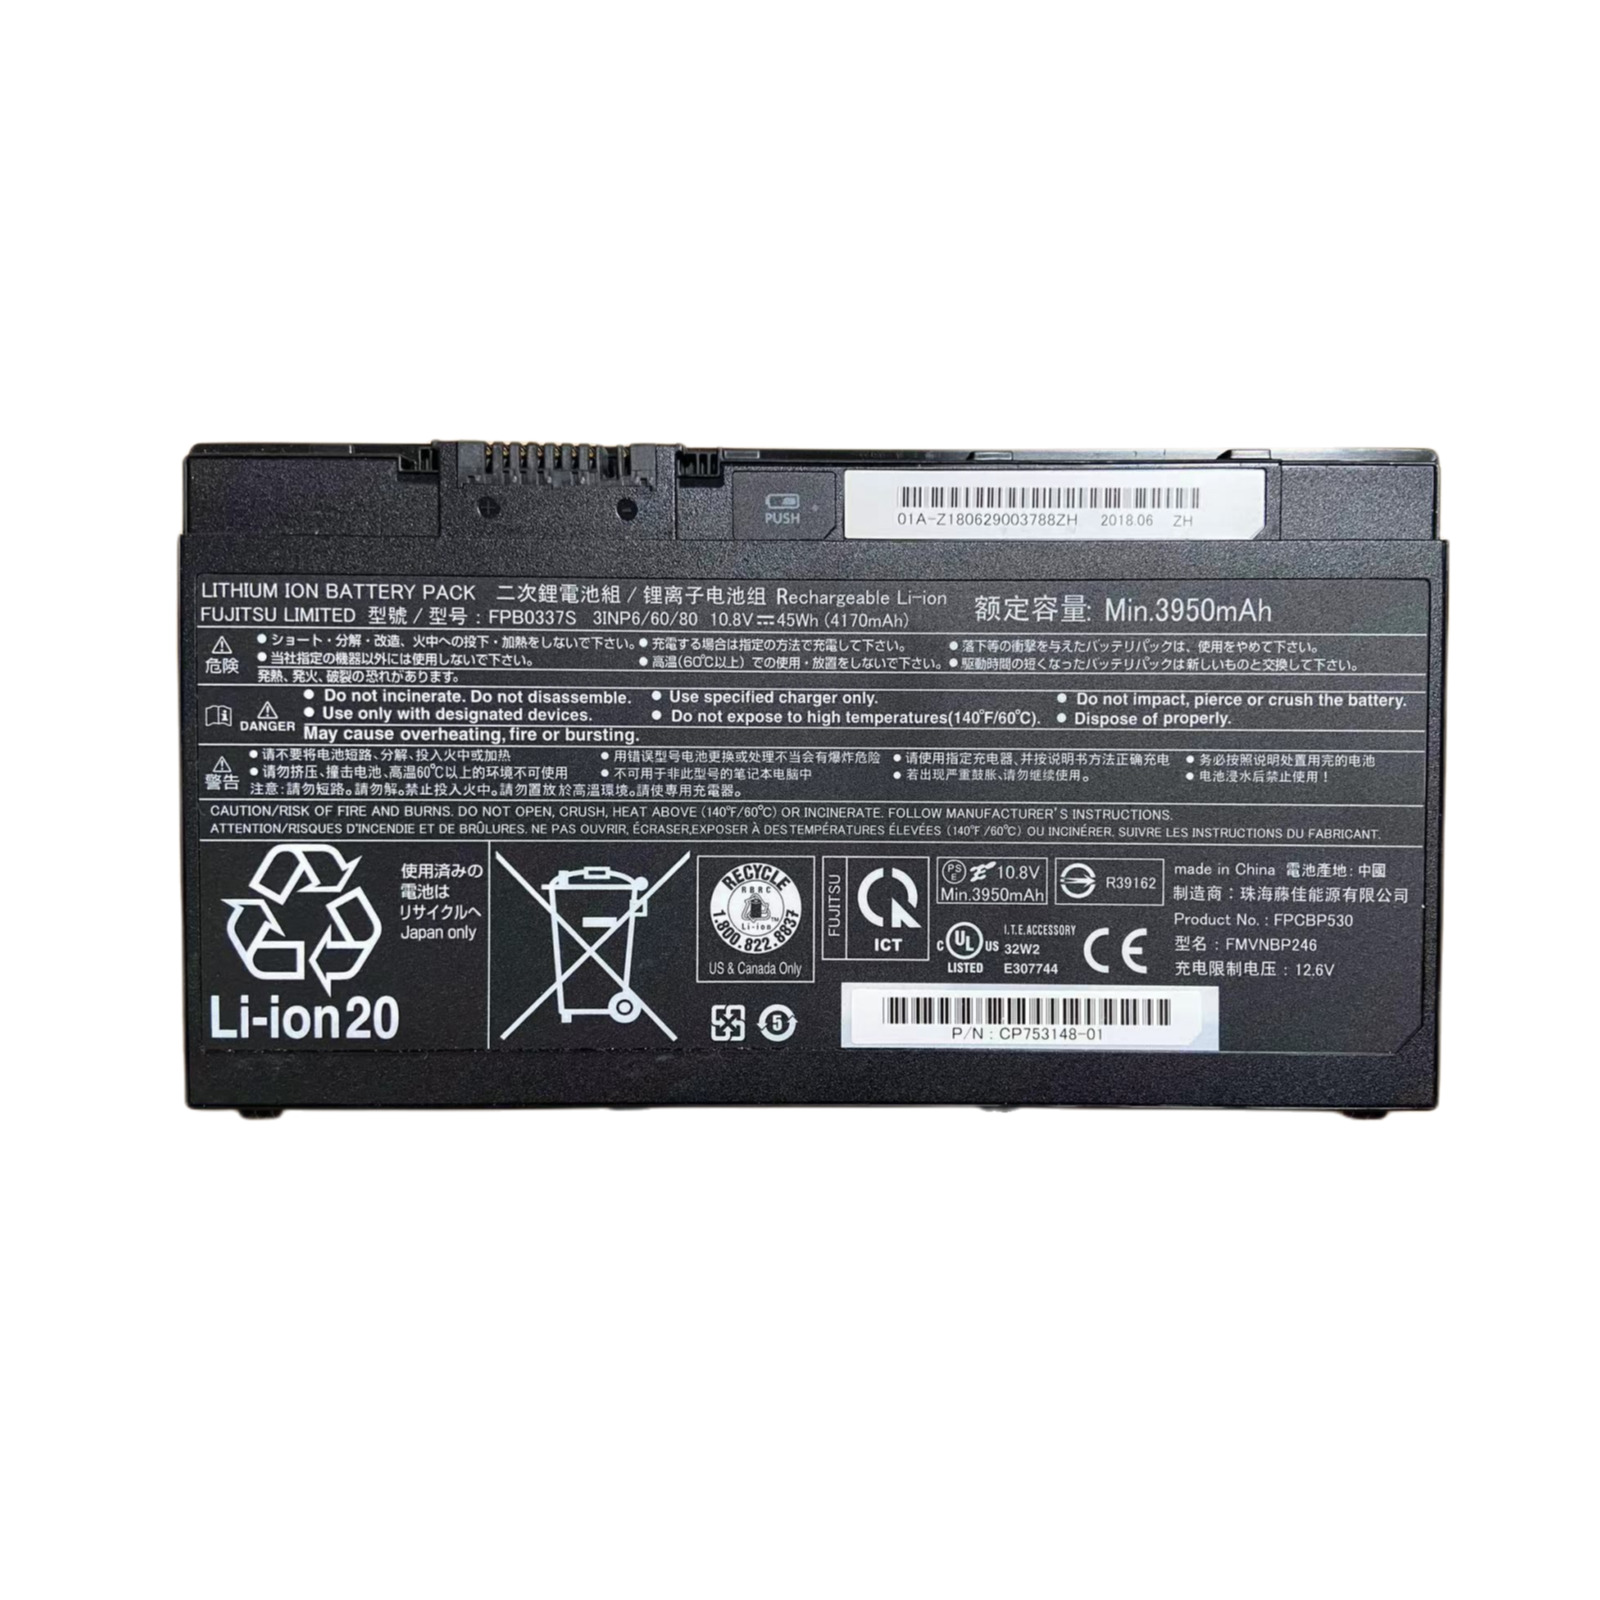 Genuine FPB0337S Battery for Fujitsu Limited Lifebook FPCBP530 P727 P728 U727